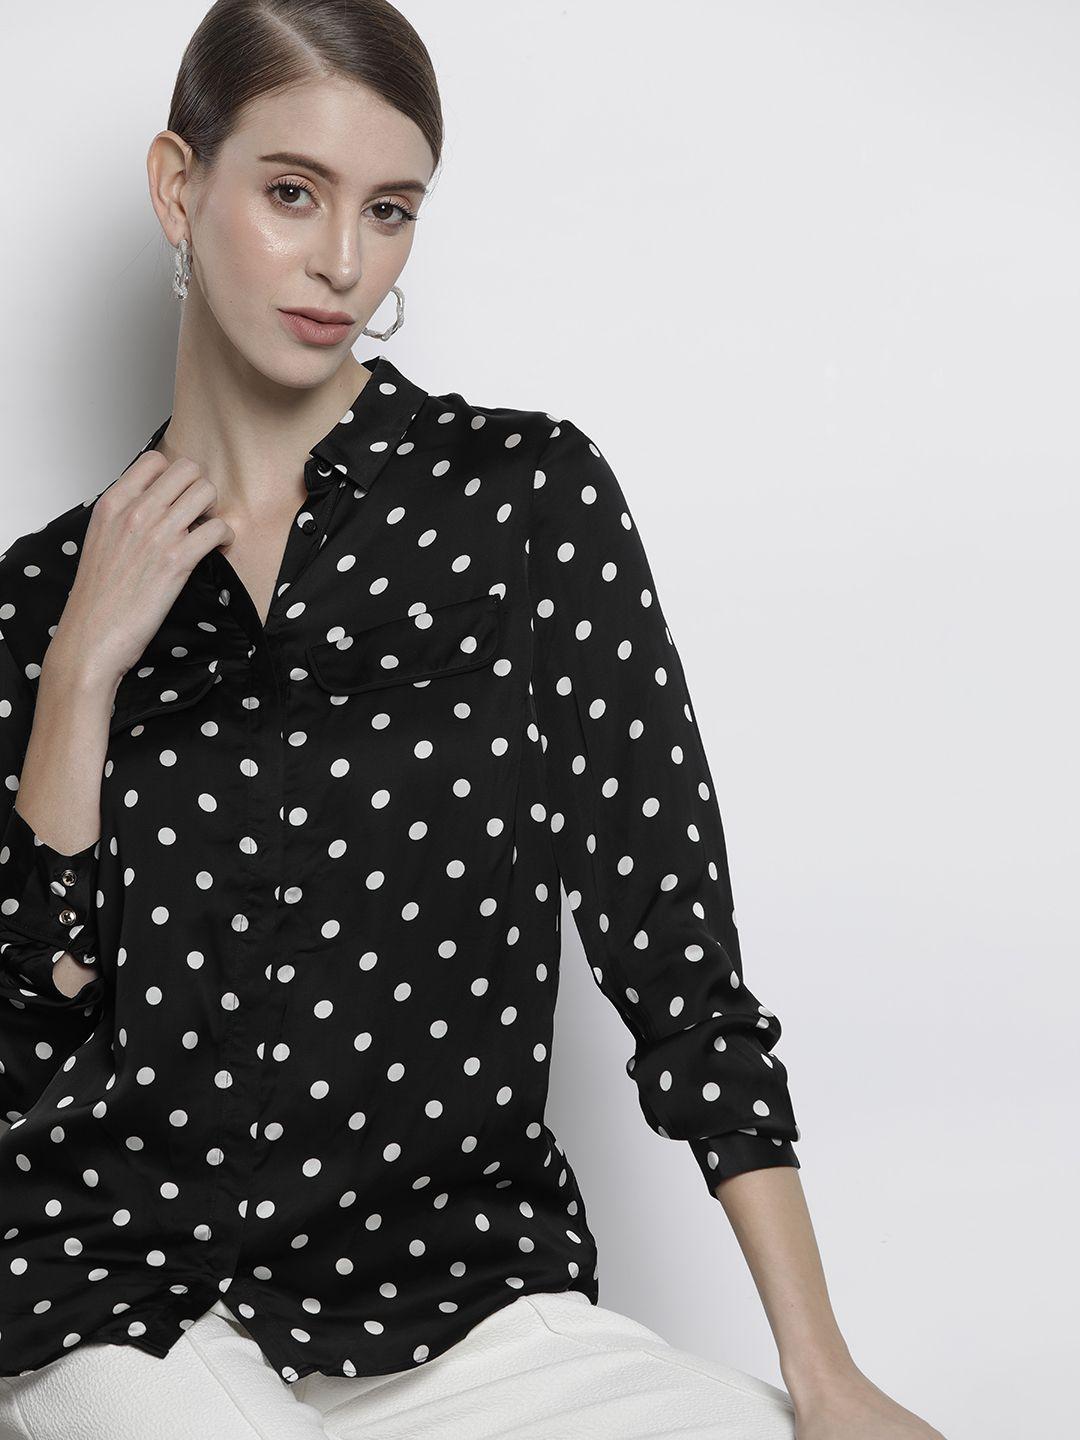 guess women black & white polka dots casual shirt